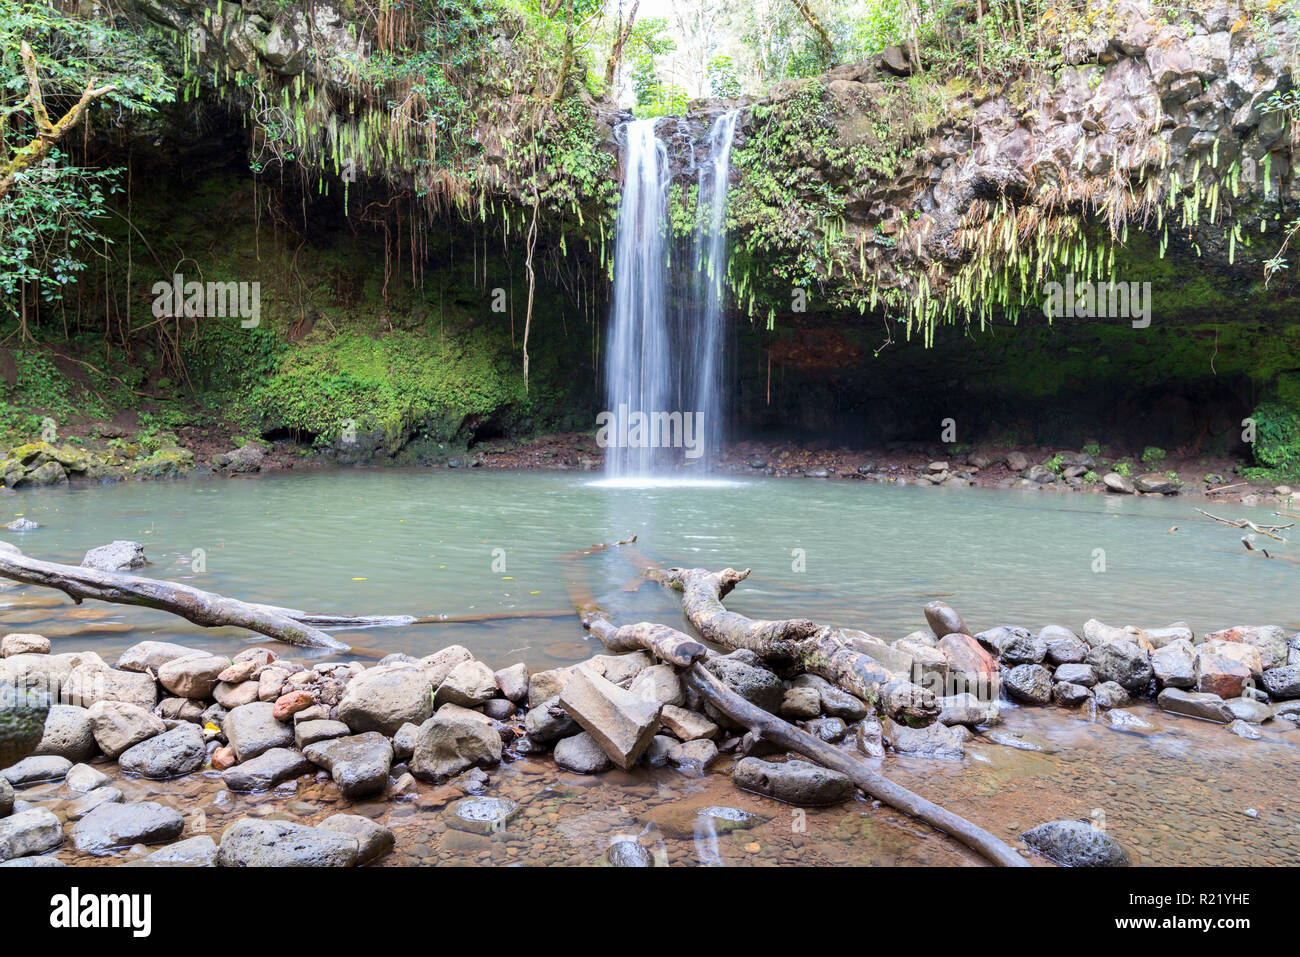 Maui, Hawaii Wasserfall - Twin Falls in Bewegung, touristische Stop auf dem Weg nach Hana Stockfoto